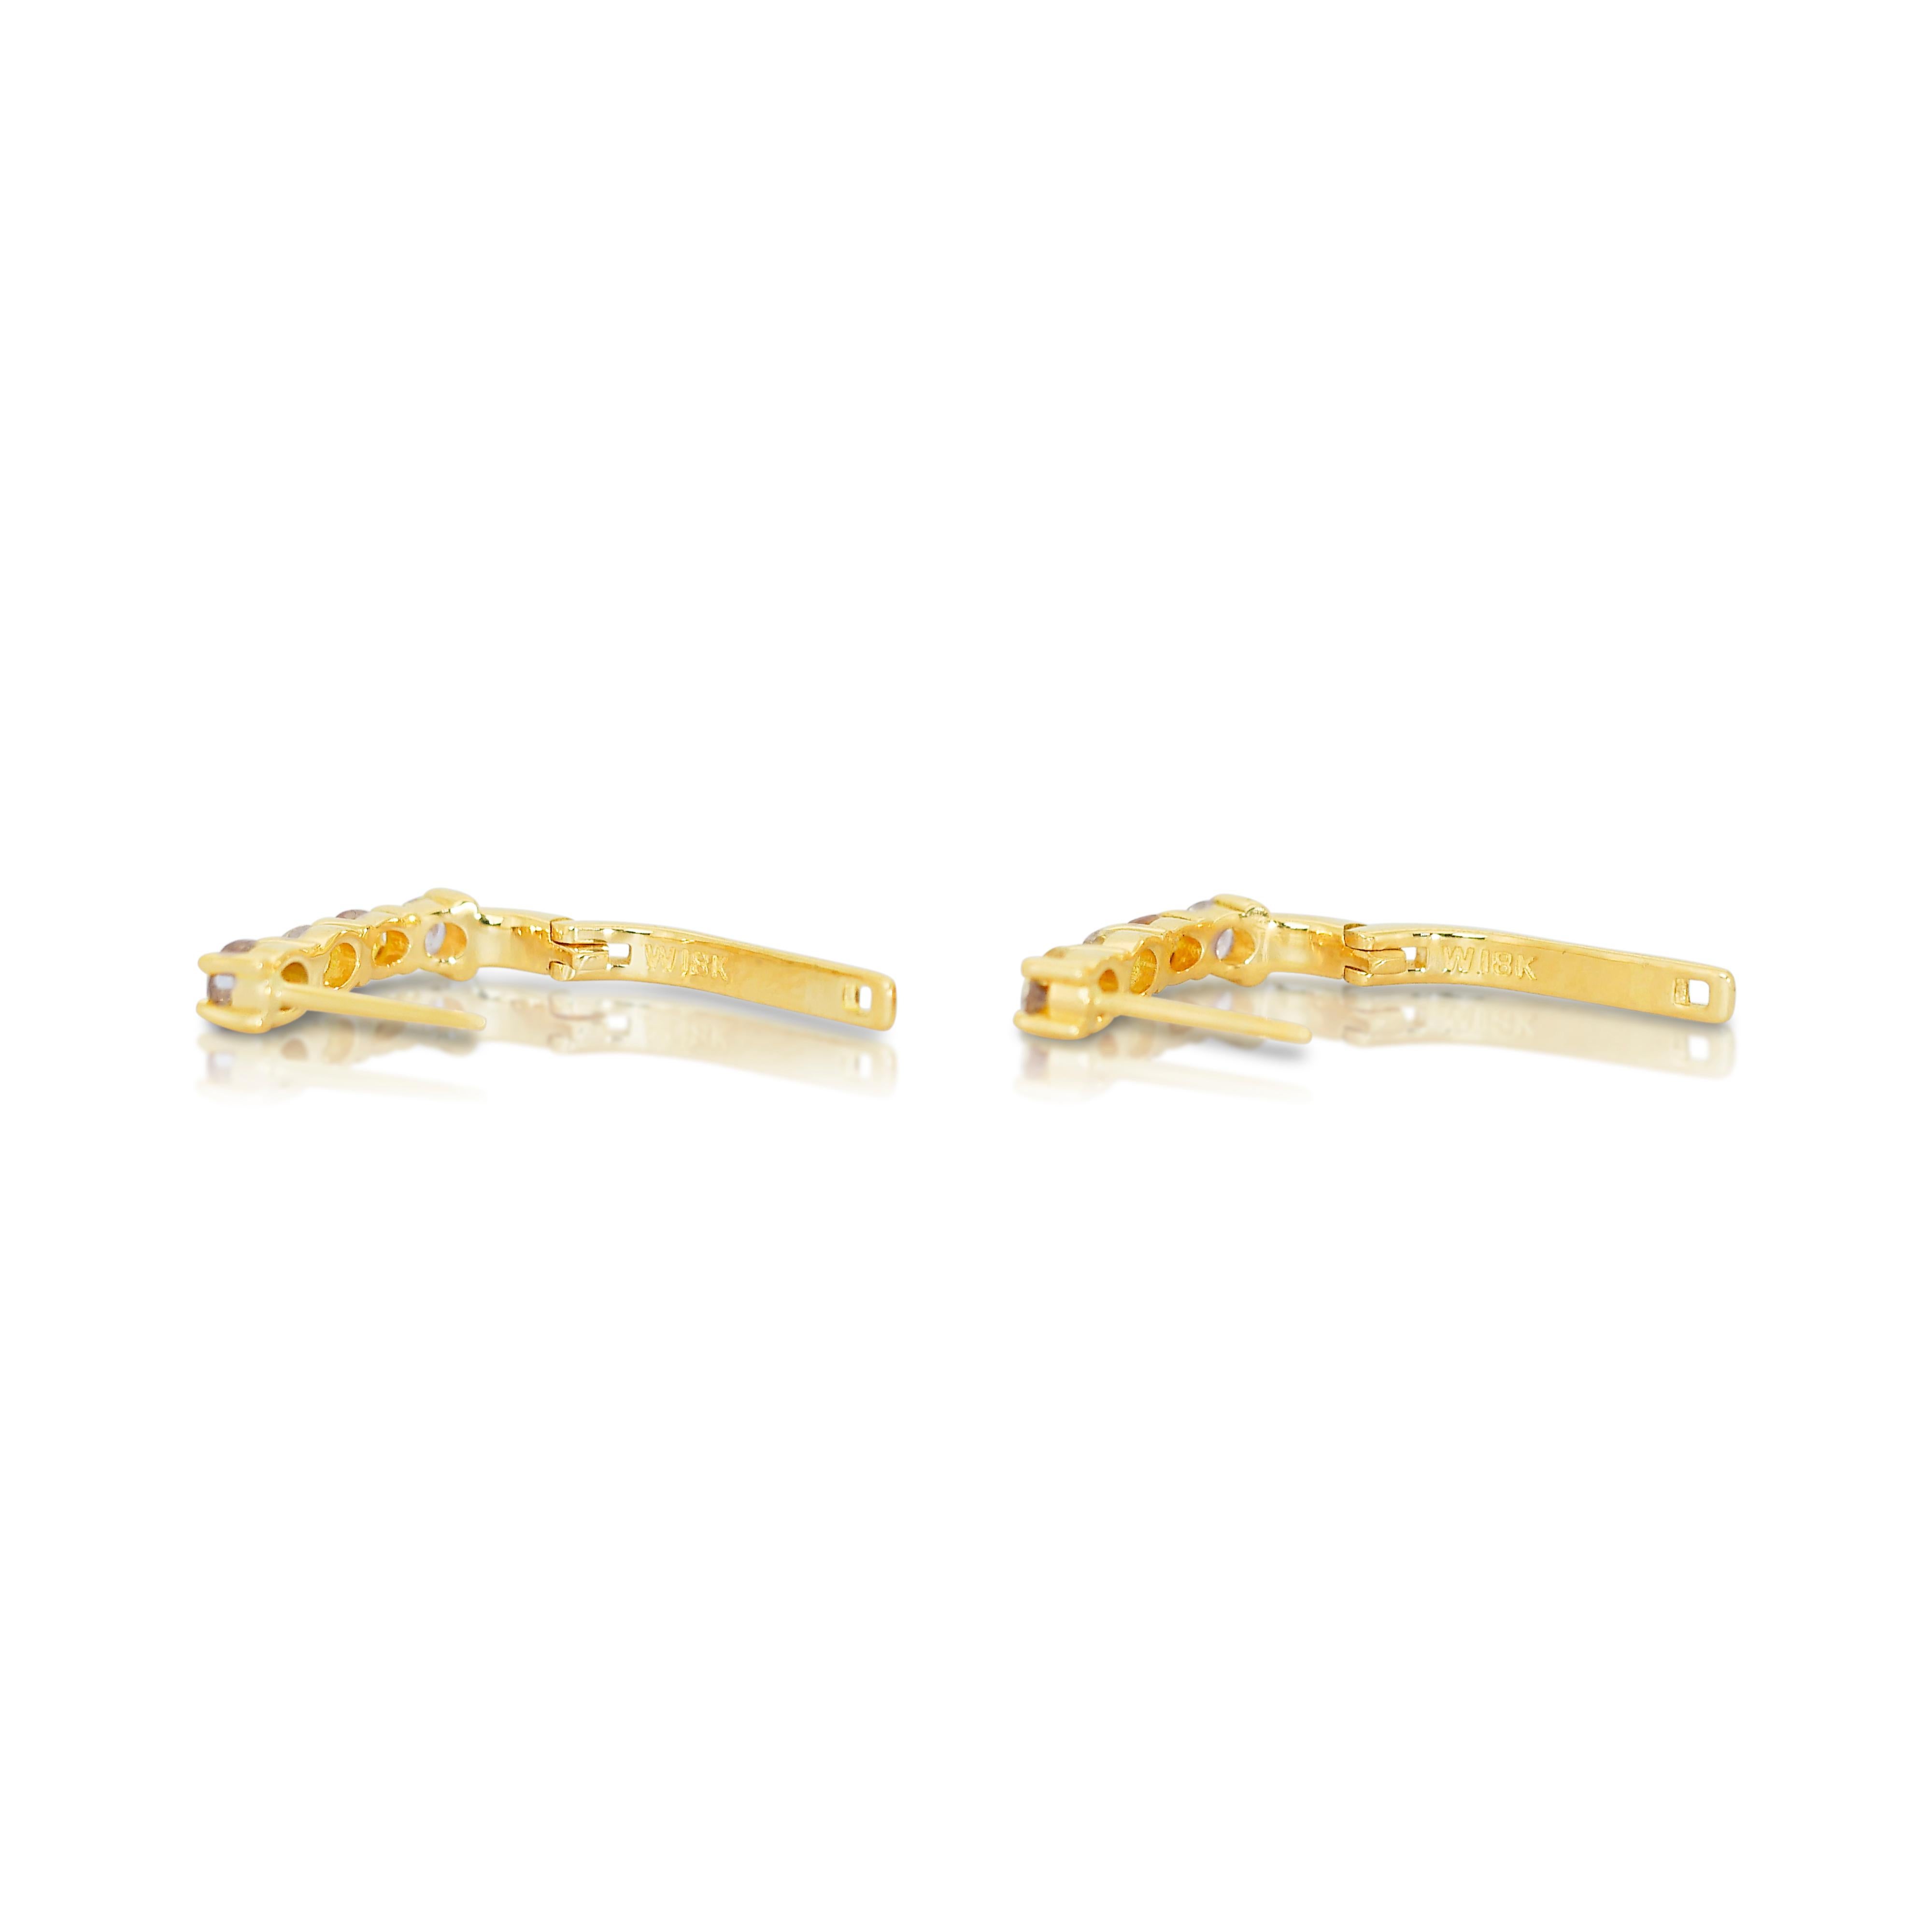 Radiant 1.44 ct Fancy Colored Diamond Earrings in 18k Yellow Gold - IGI  For Sale 3